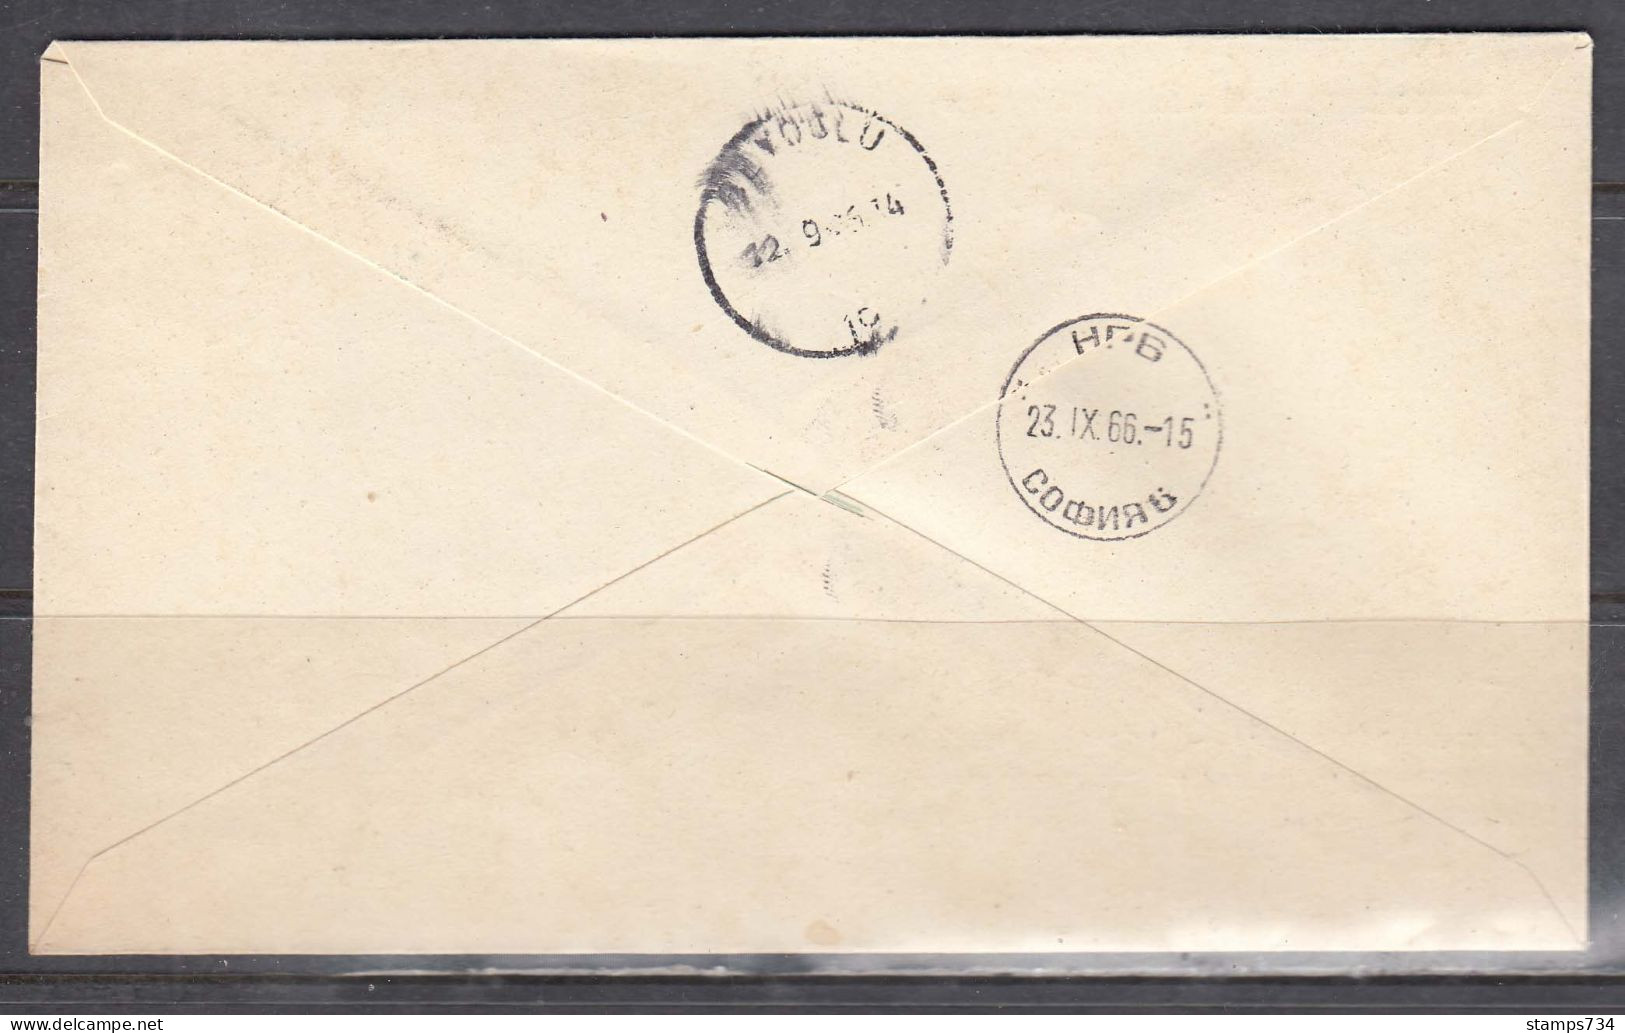 Turkey 1966/4 - Stamp Exhibition BALKANFILA II, Day Of Yugoslavia, Letter With Spec. Cancelation, Travel To Sofia - Briefe U. Dokumente